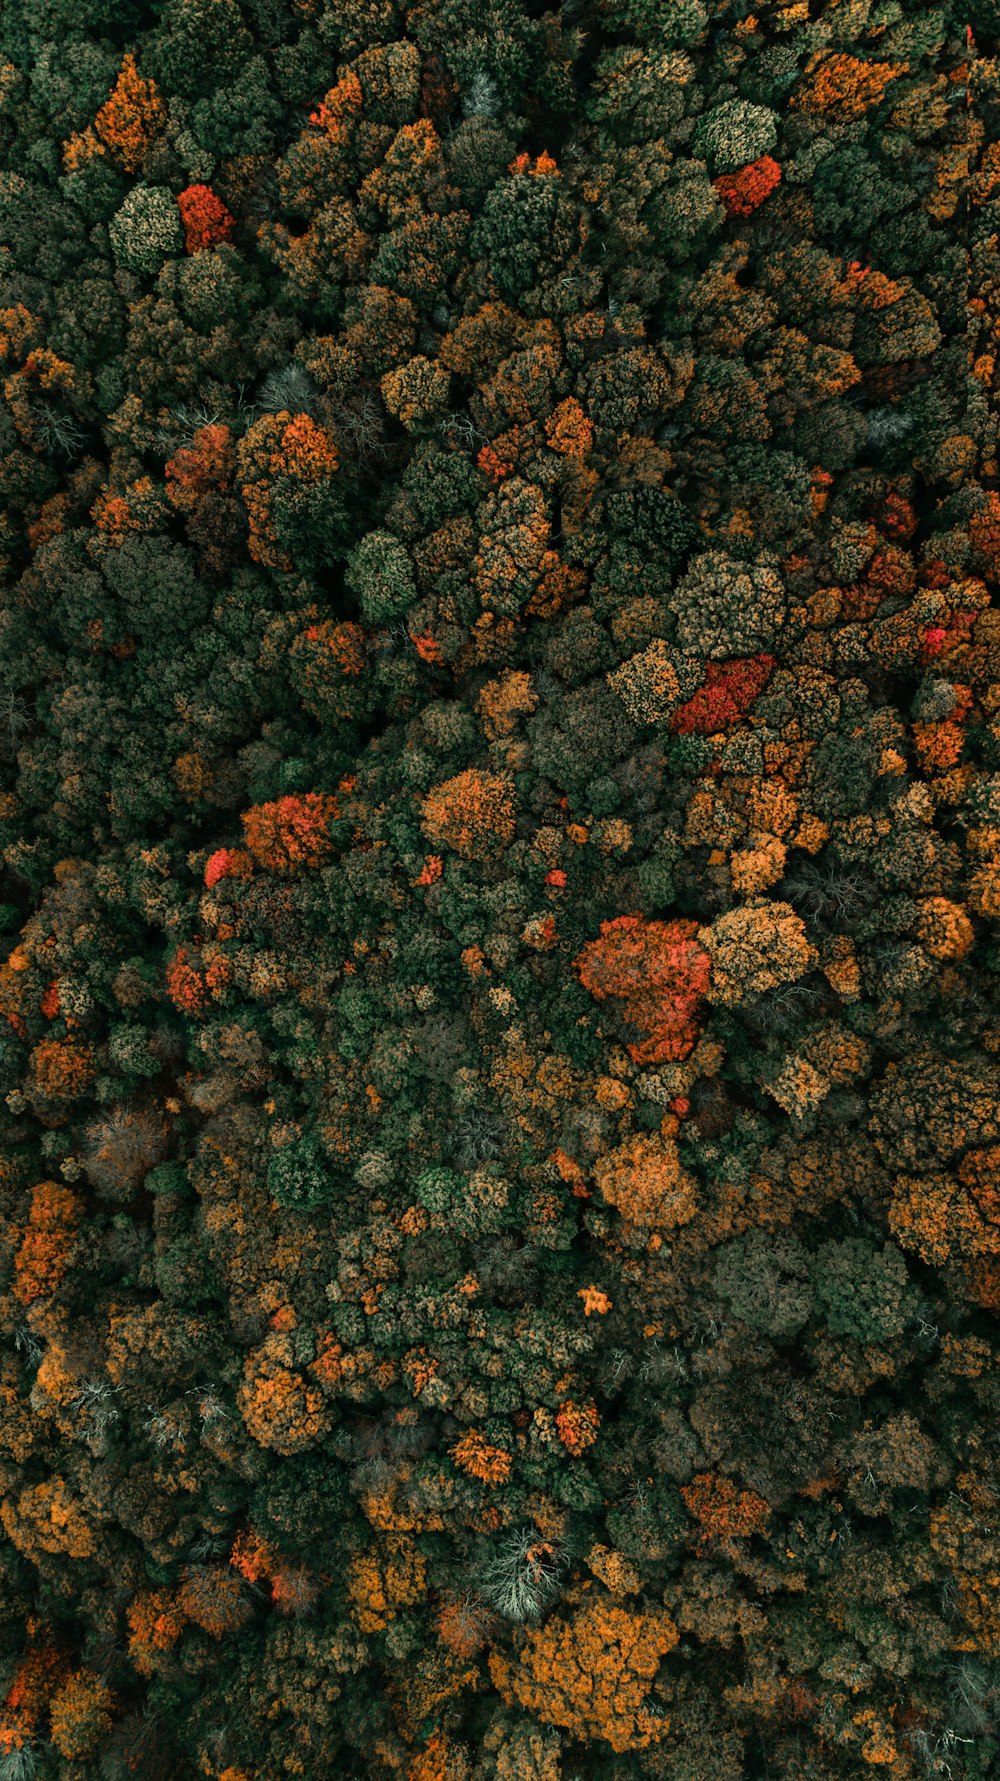 fotografia aérea de árvores de folhas verdes